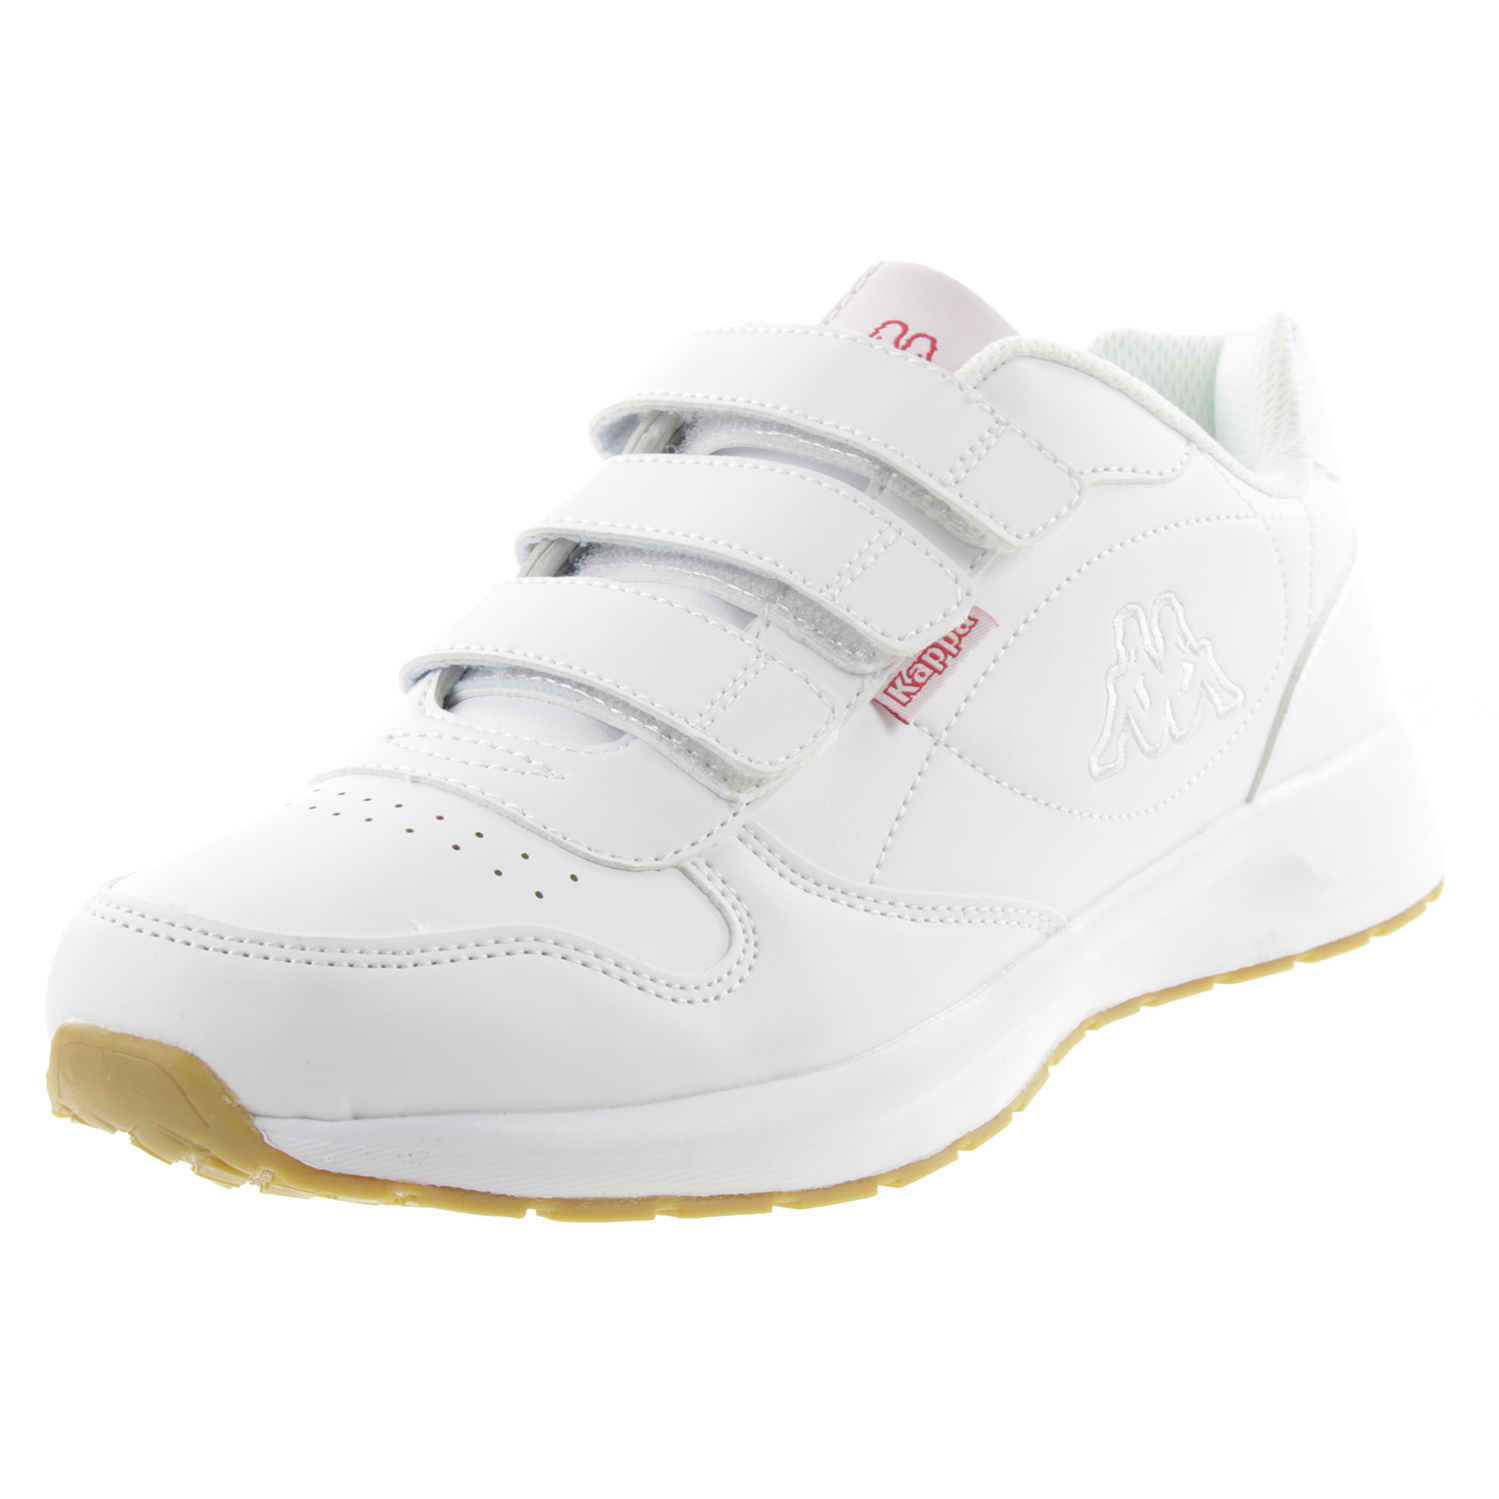 Kappa Unisex-Erwachsene Base VL Sneaker, Weiß (White 1010), 36 EU